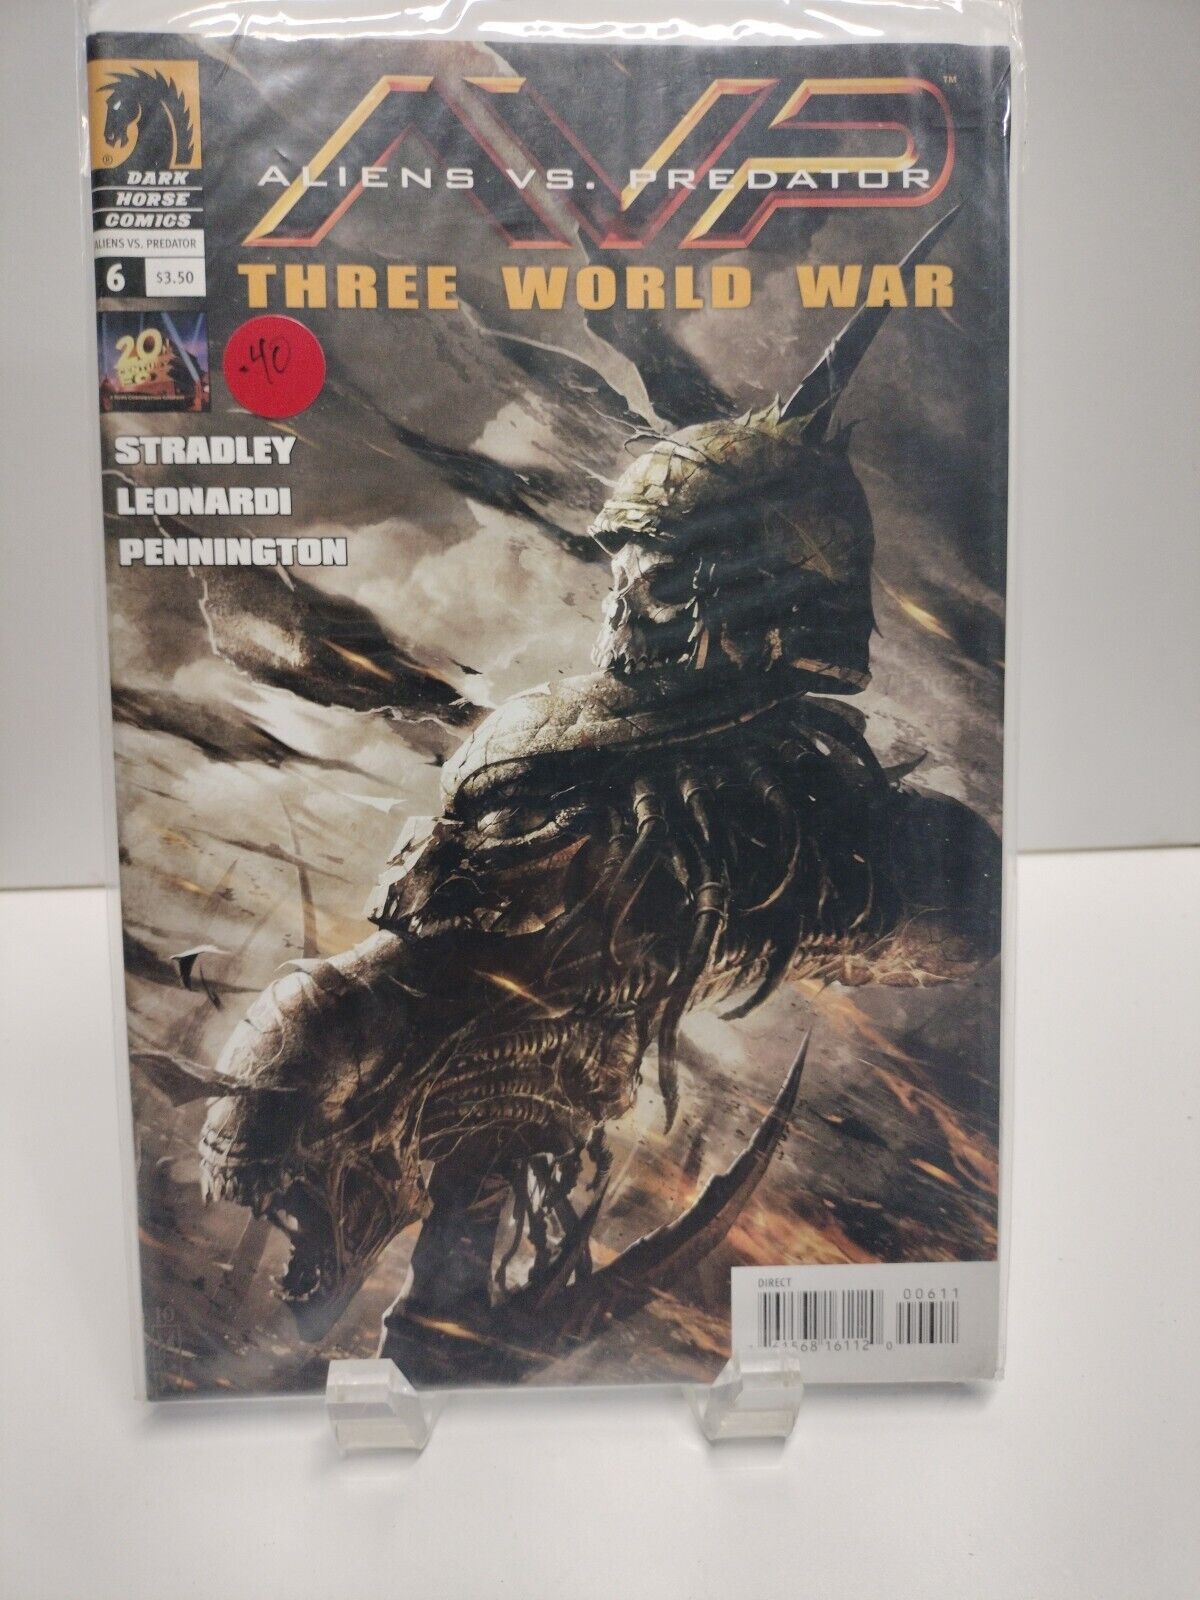 ALIENS vs PREDATOR Three World War #6 (2010 ) Dark Horse Comics FINE